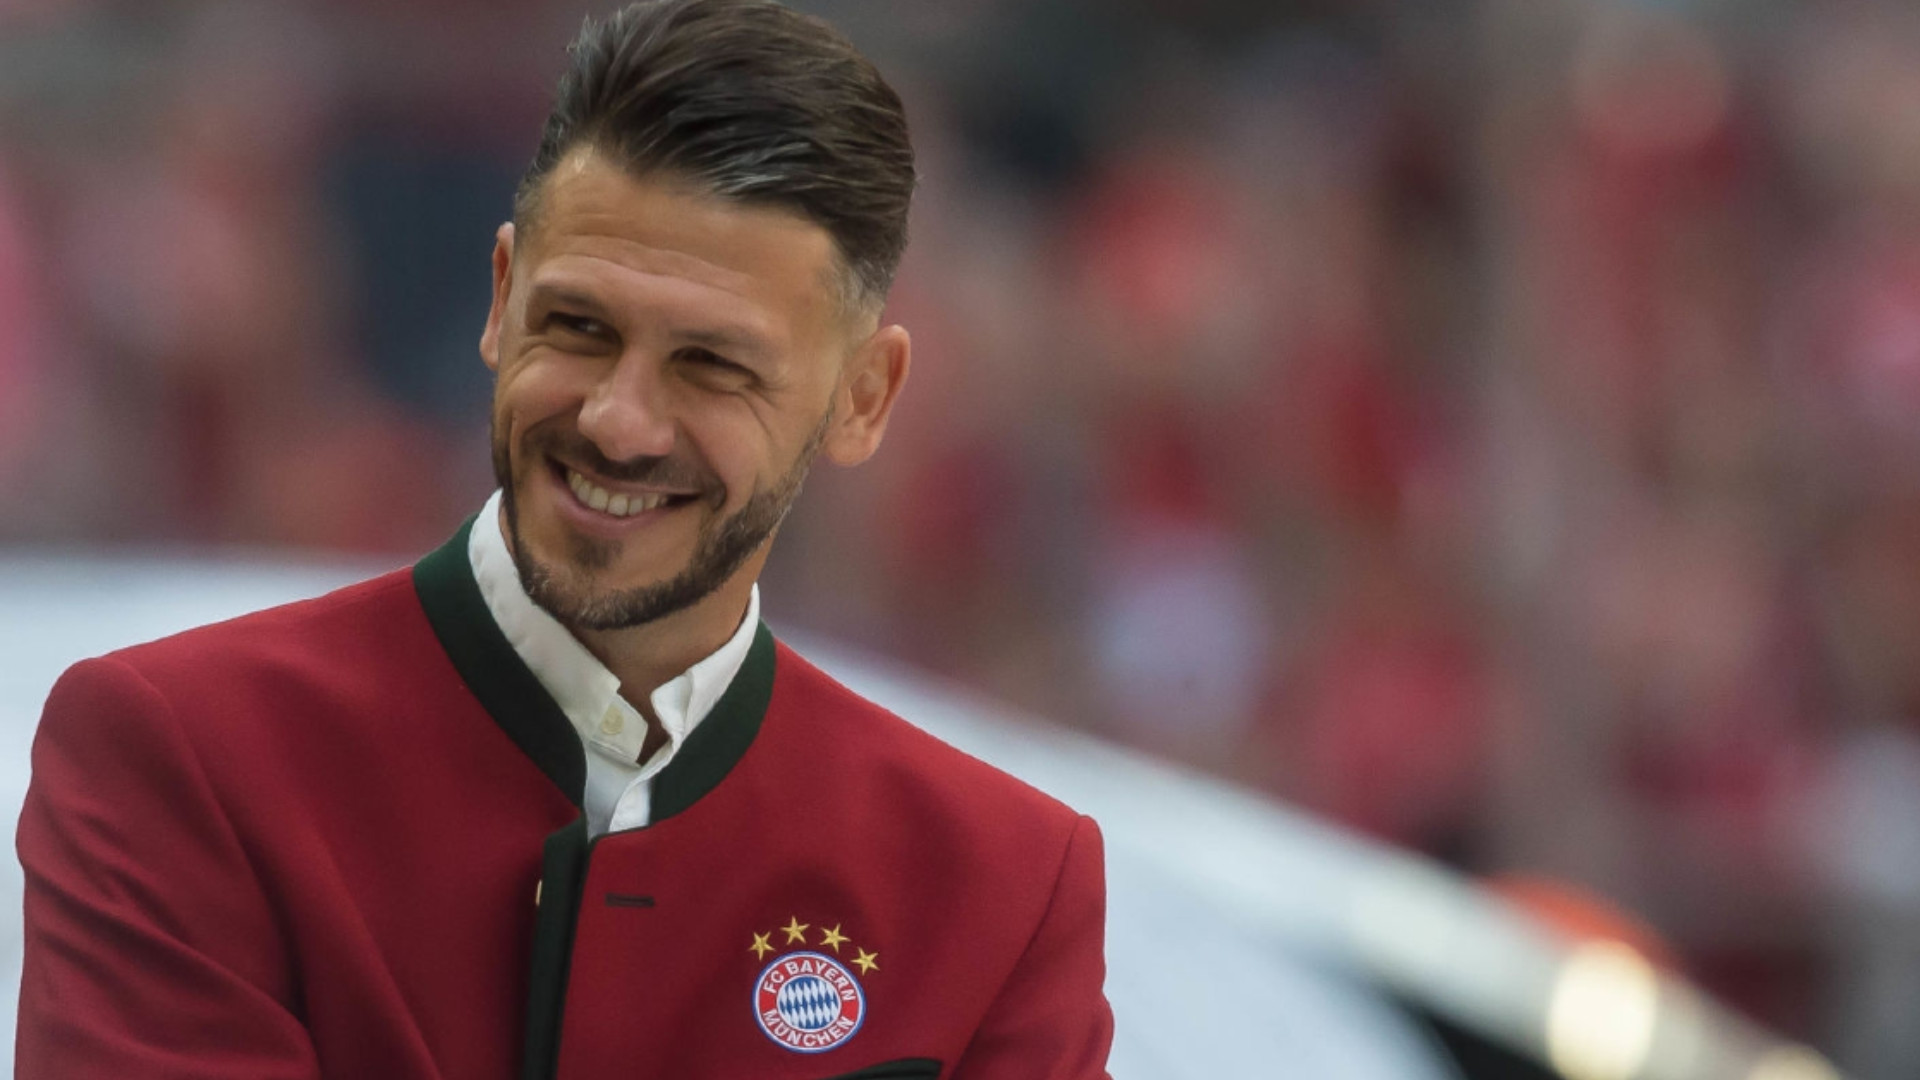 Bayern Munich se despide de Demichelis: "Mucha suerte en tu regreso a River"